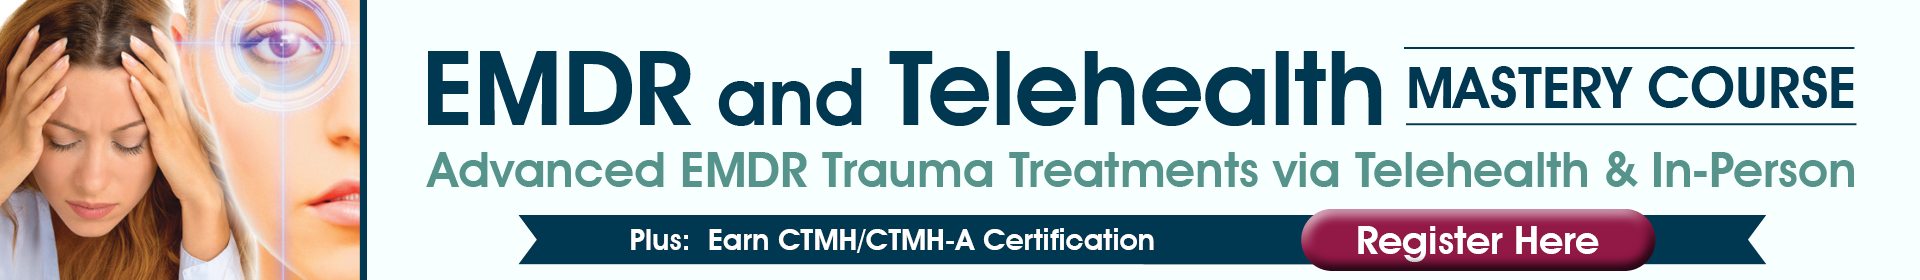 EMDR and Telehealth Mastery Course: Advanced EMDR Trauma Treatments via Telehealth & In-Person